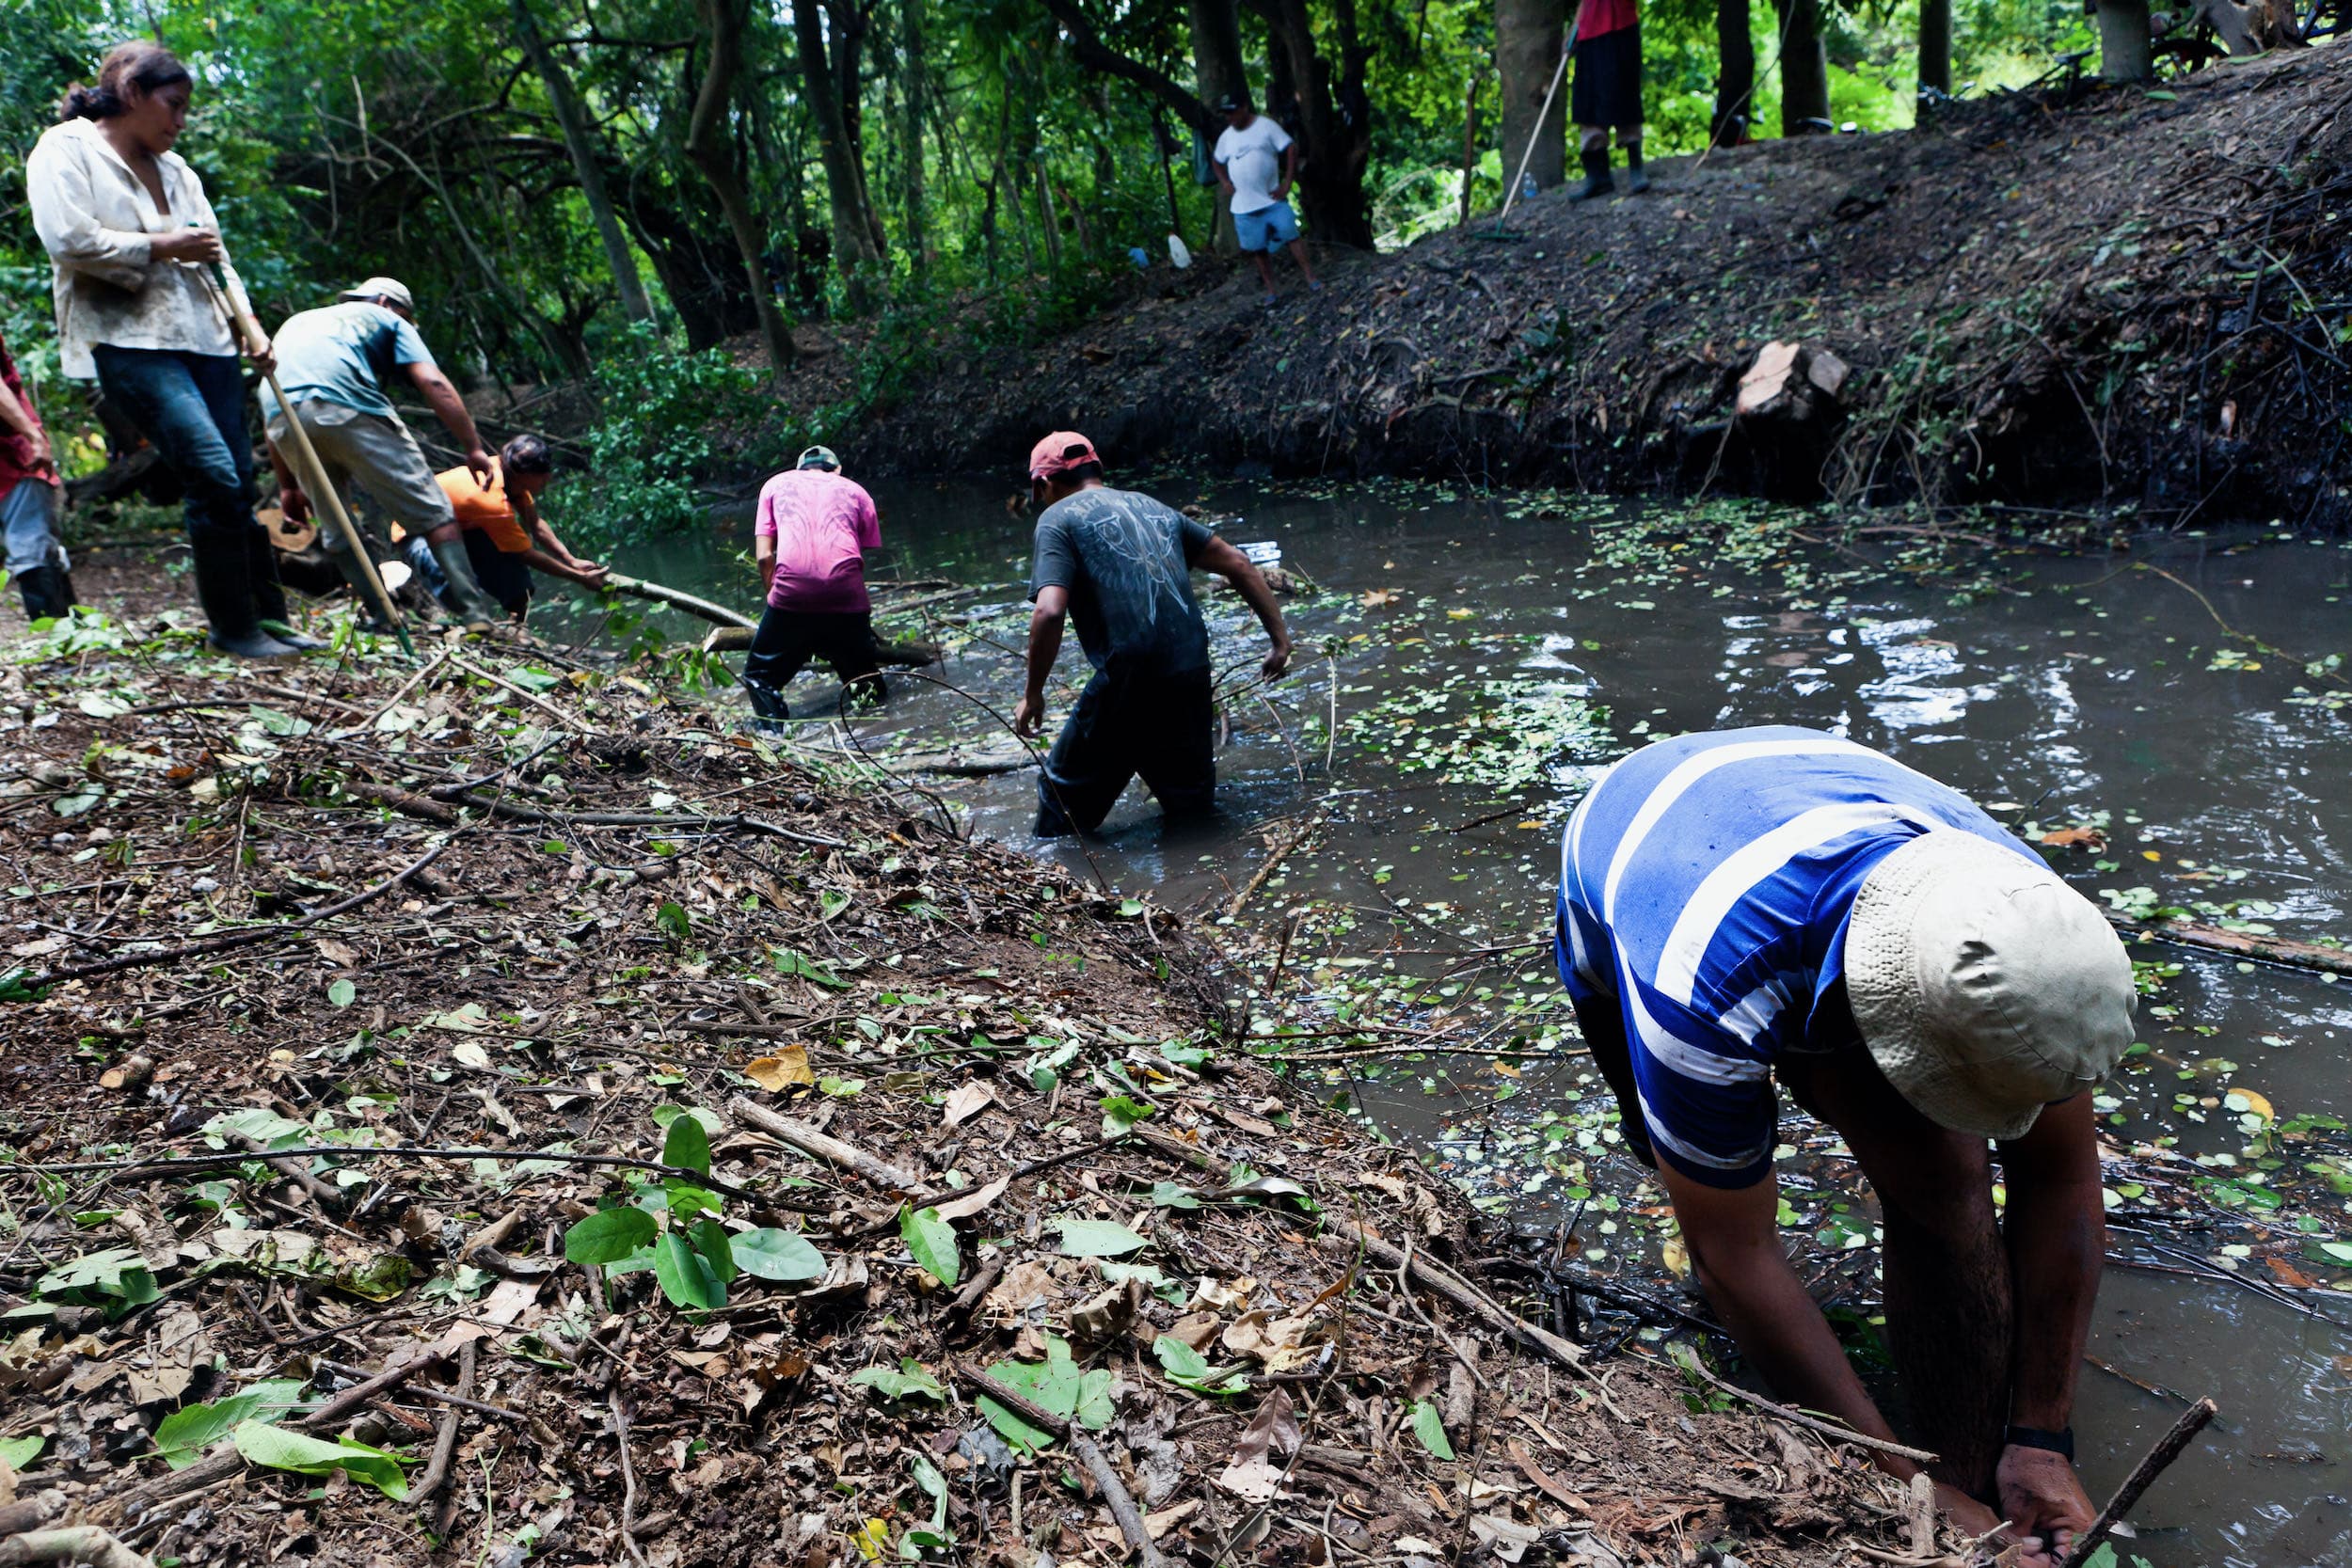 Restoring mangroves through community channel digging in El Salvado